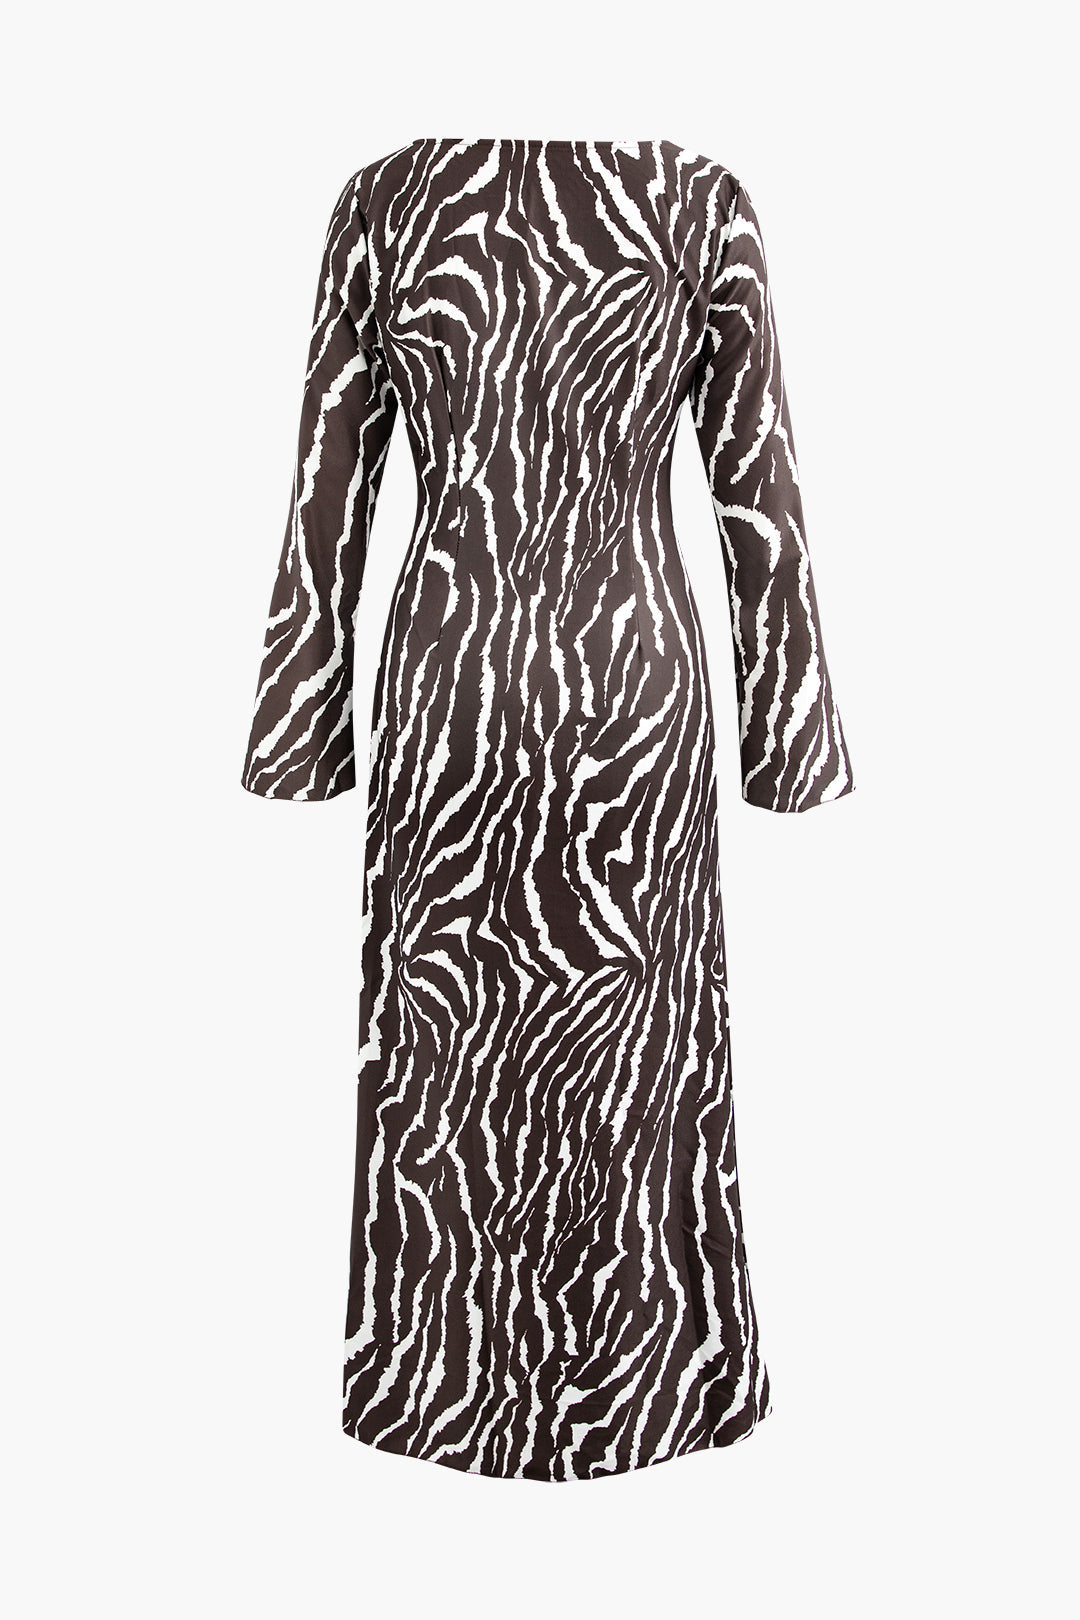 Zebra-stripe Print Round Neck Bell Sleeve Maxi Dress